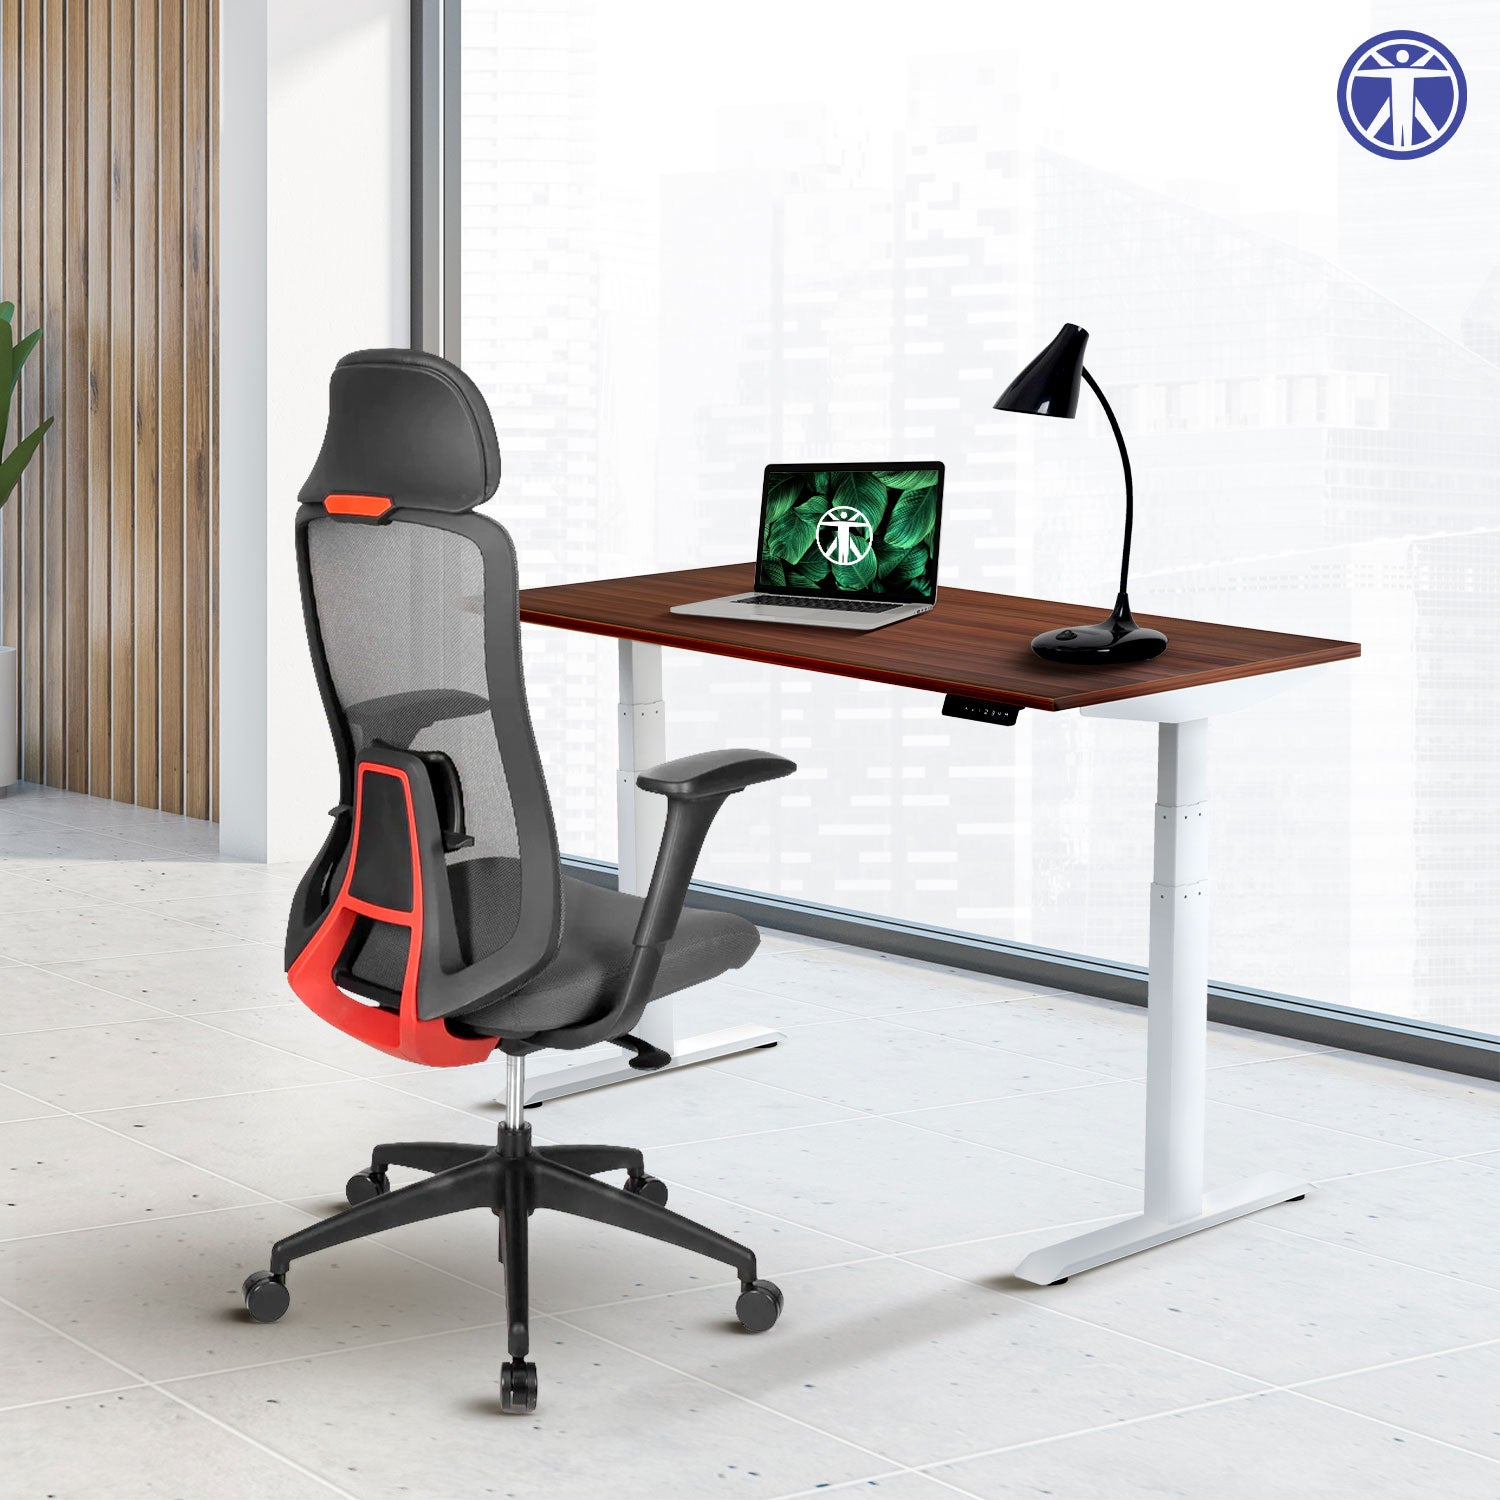 ergonomic office chair.jpeg